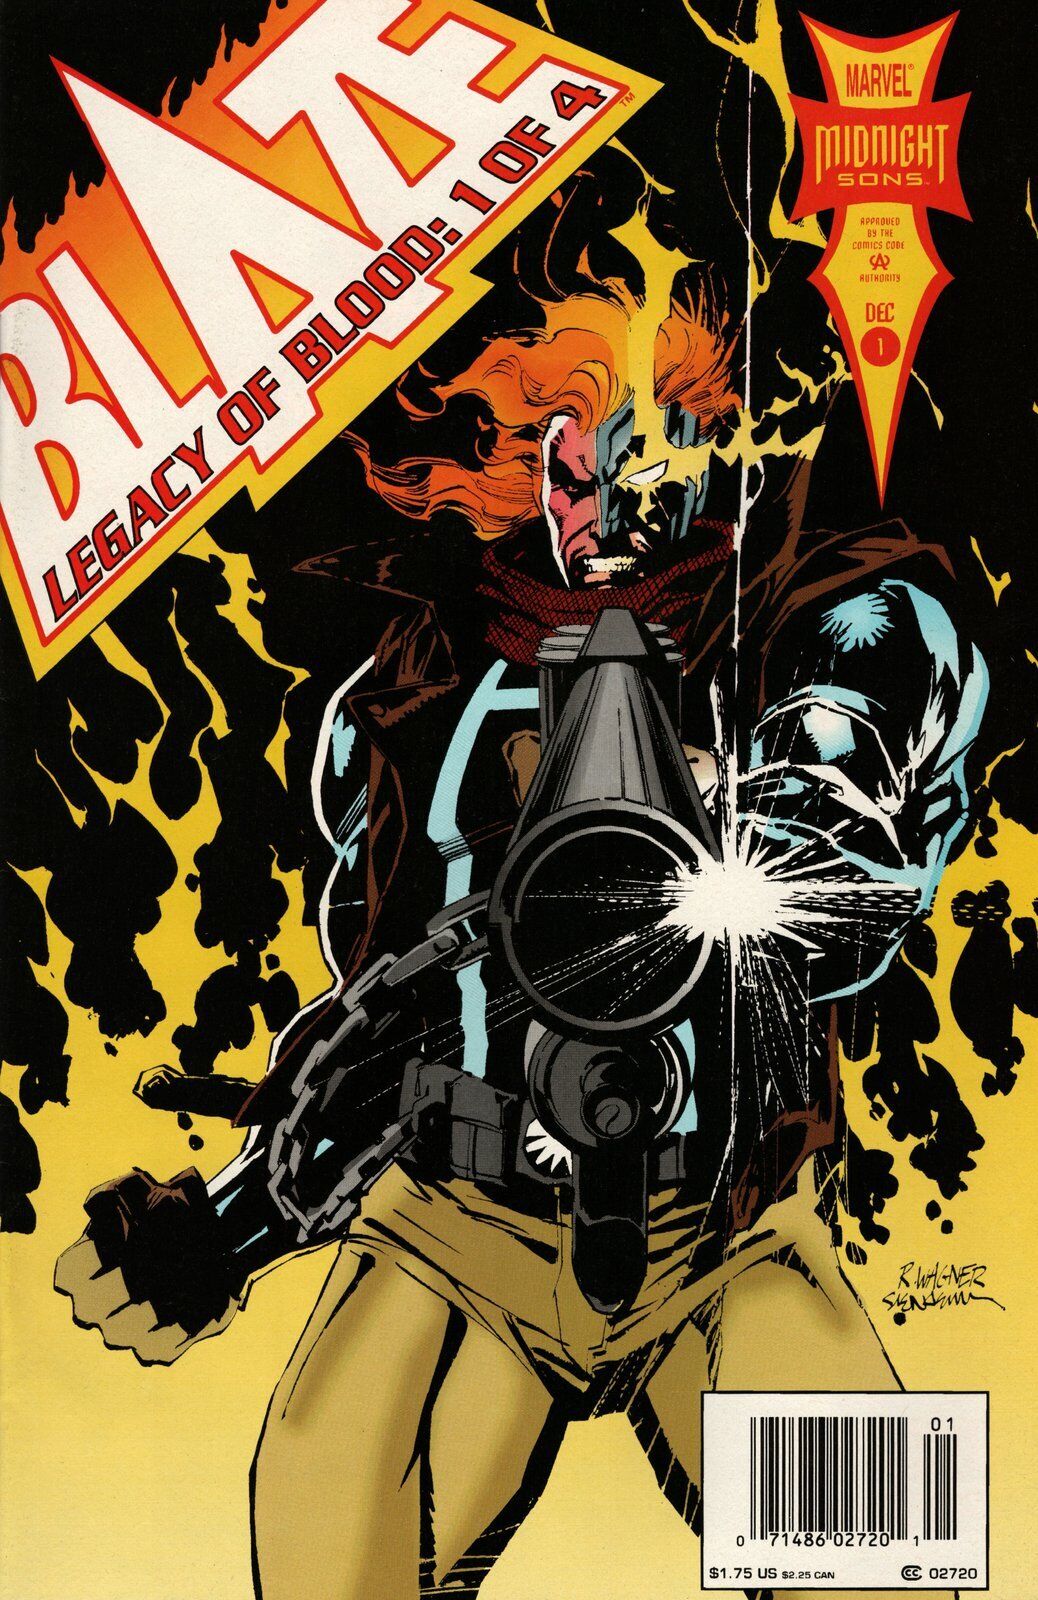 Blaze: Legacy of Blood #1 Newsstand Cover (1993-1994) Marvel Comics